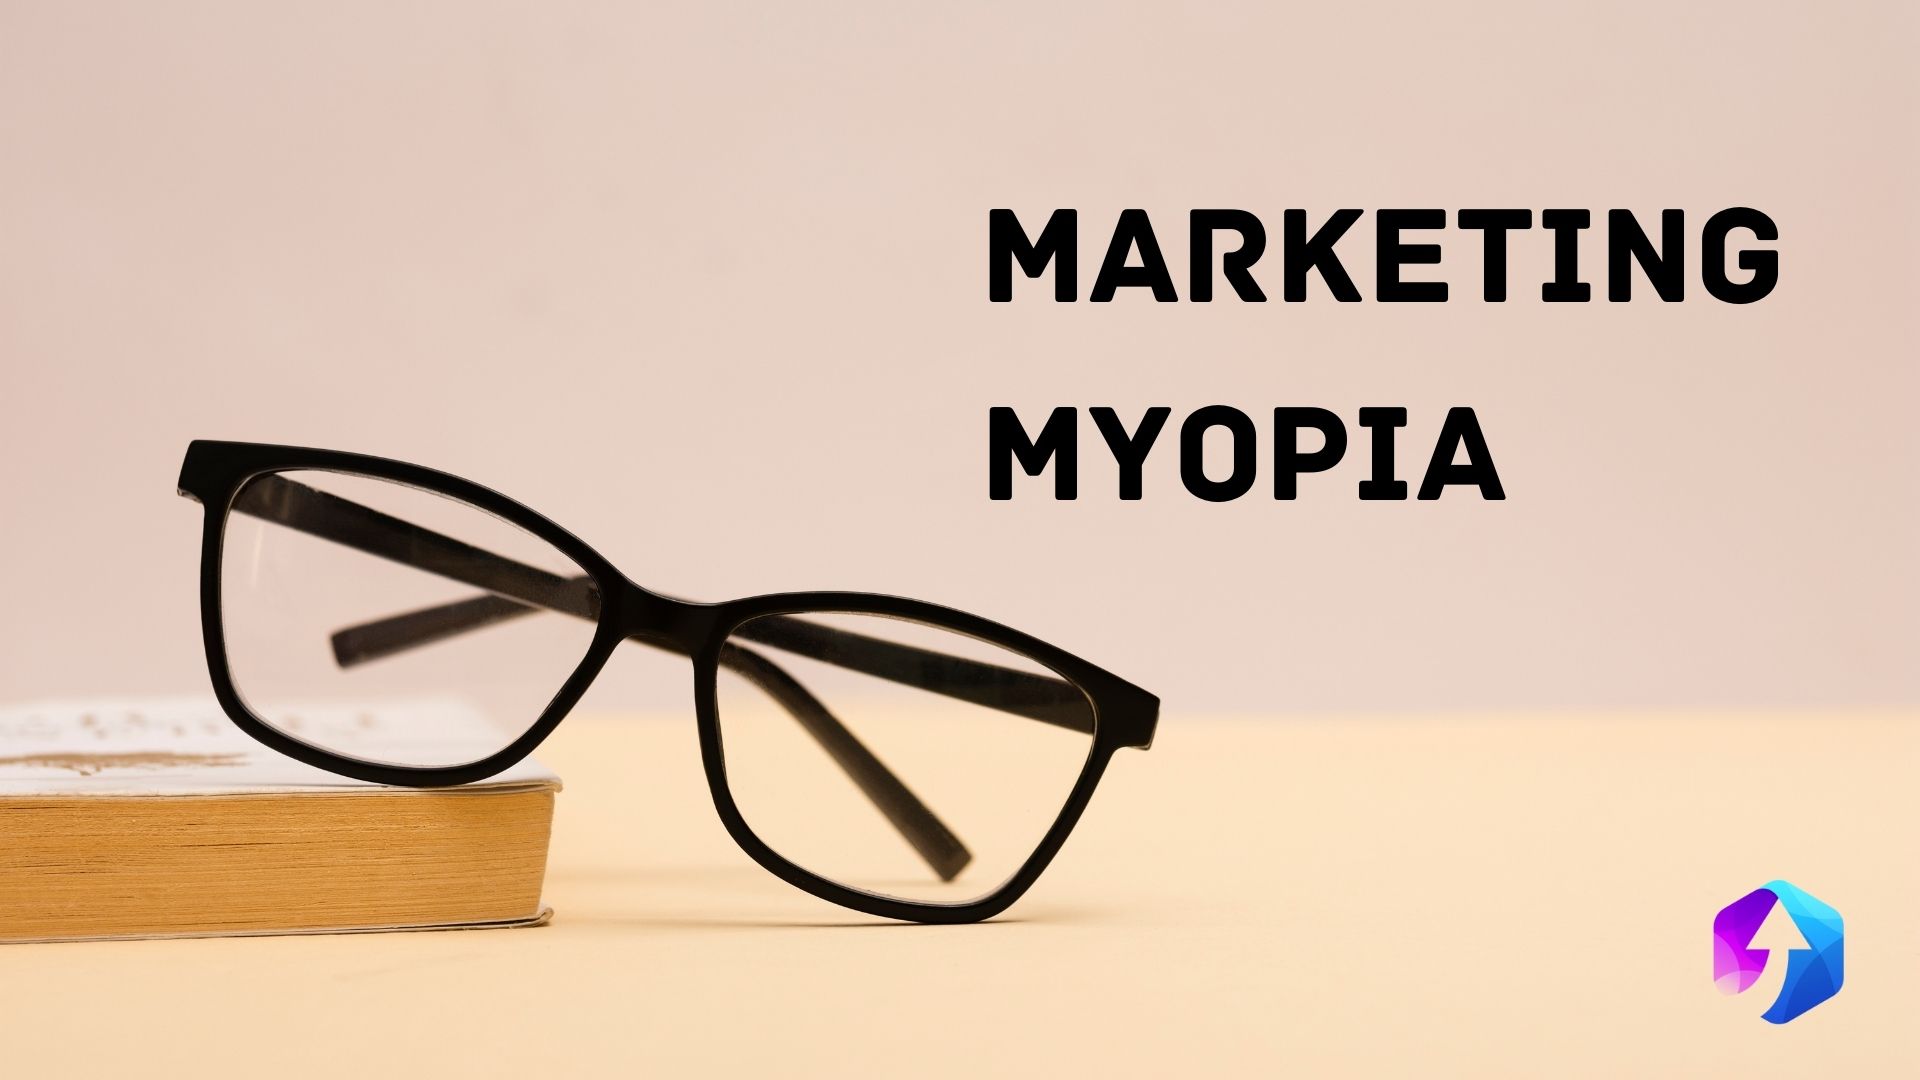 Marketing Myopia